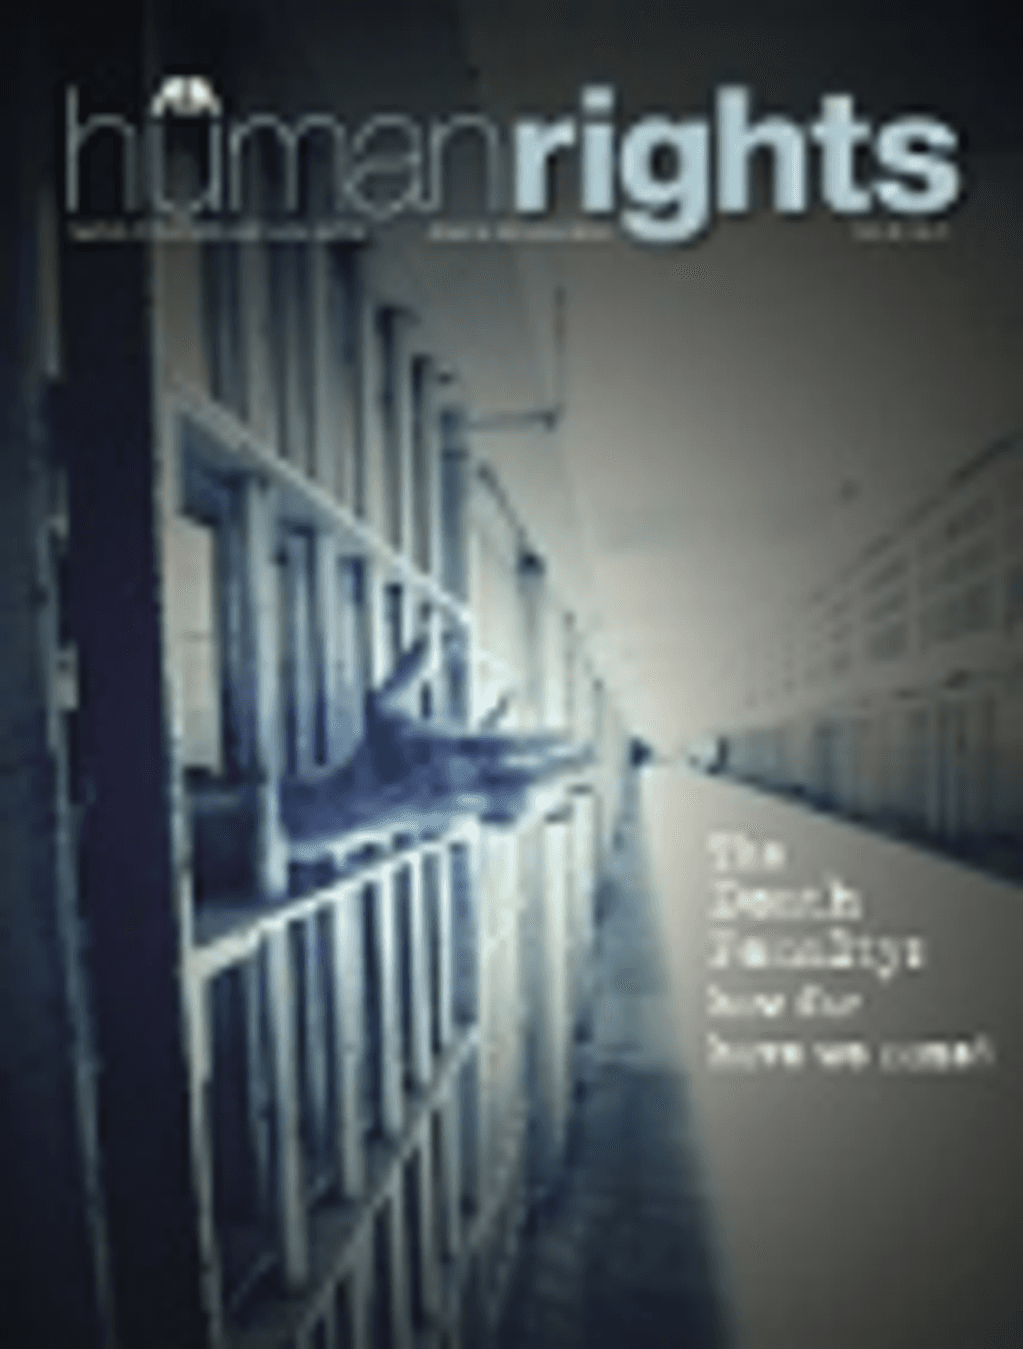 American Bar Association Human Rights Magazine on Capital Punishment